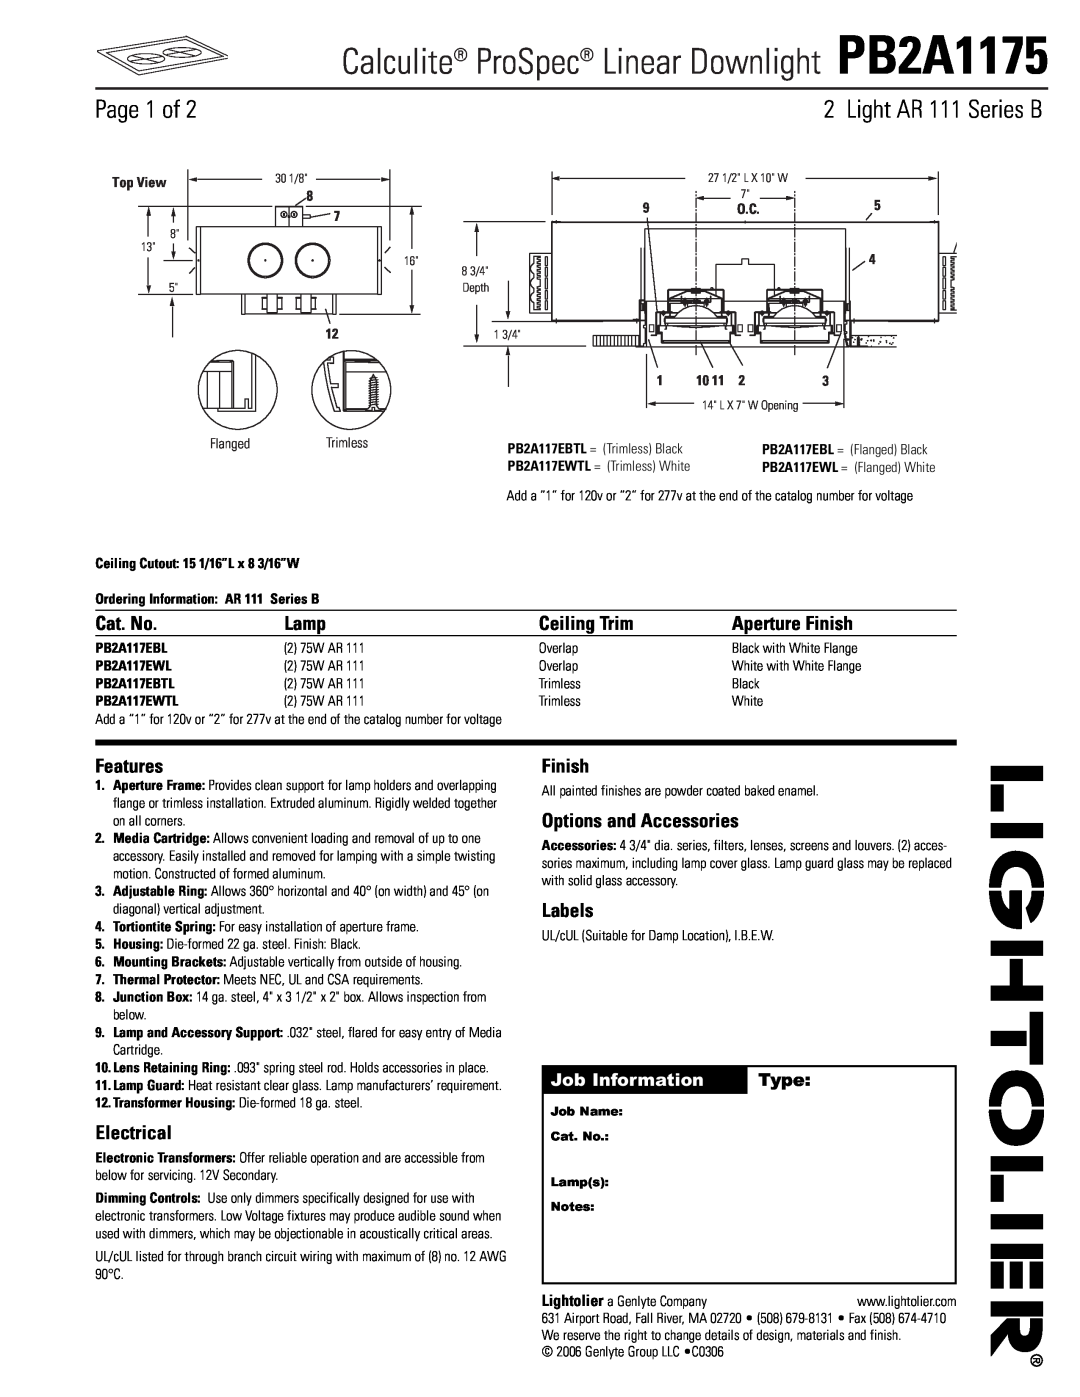 Lightolier manual Page 1 of, Job Information, Type, Calculite ProSpec Linear Downlight PB2A1175, Light AR 111 Series B 